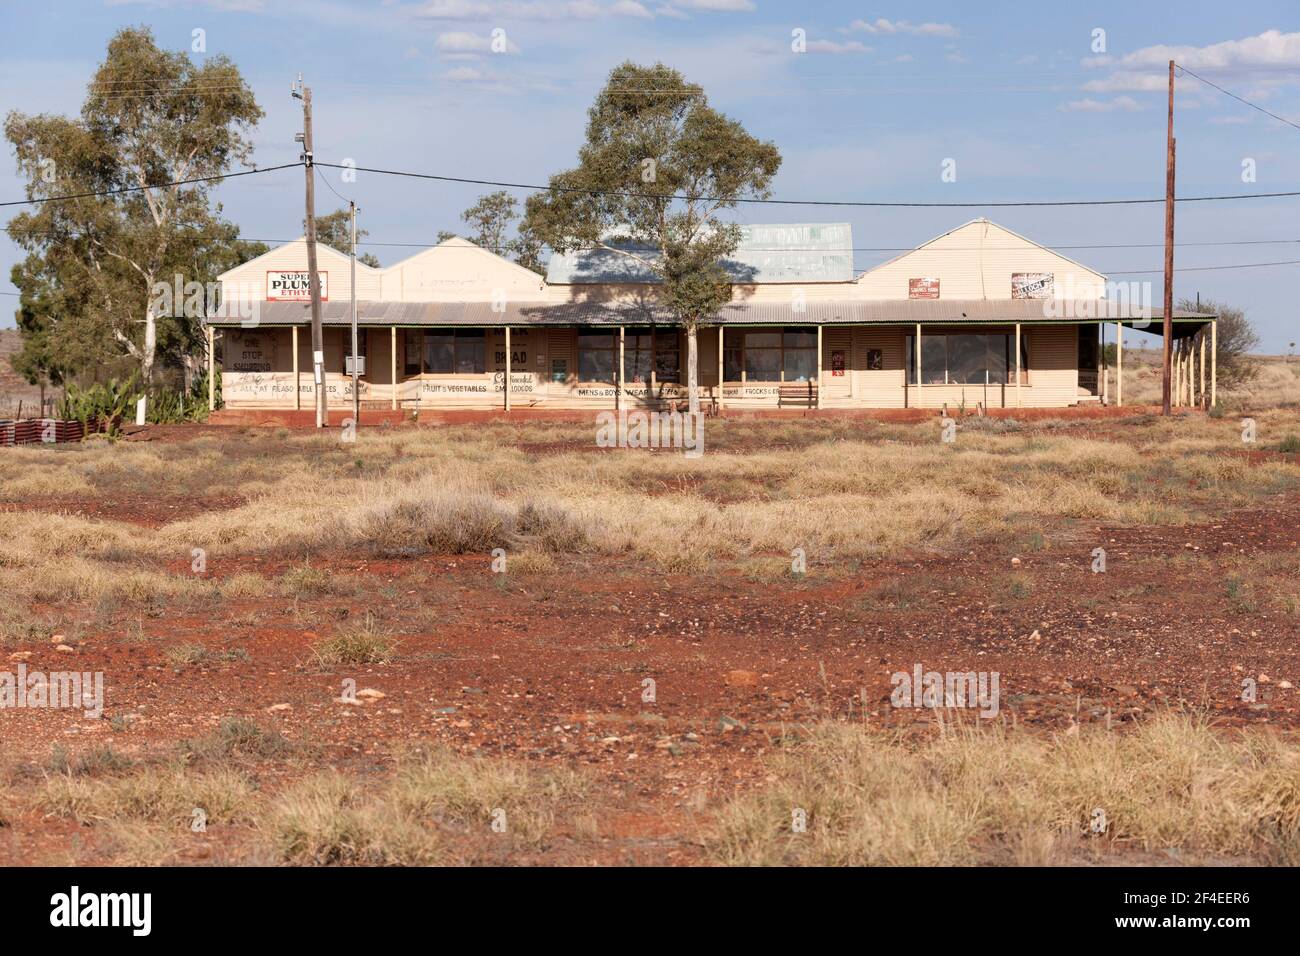 Corrugated iron shops of the historical gold mining town, Gwalia, Leonora Western Australia Stock Photo